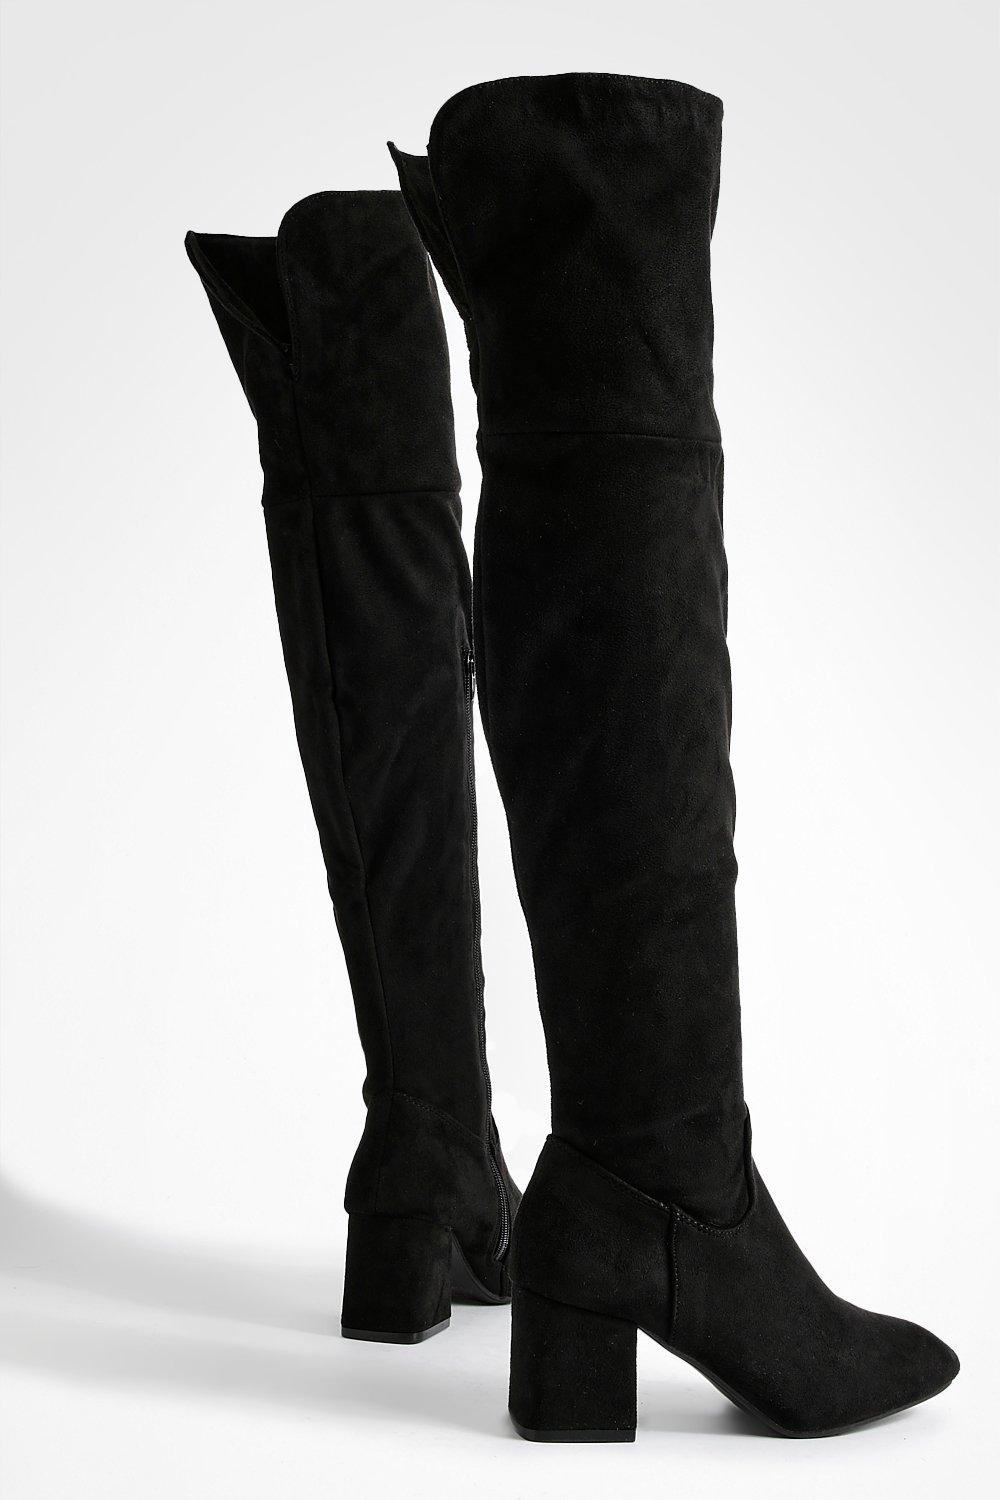 Mujer Zapatos de Botas de Botas mosqueteras Botas Mosqueteras Con Tacón Grueso de Boohoo de color Negro 